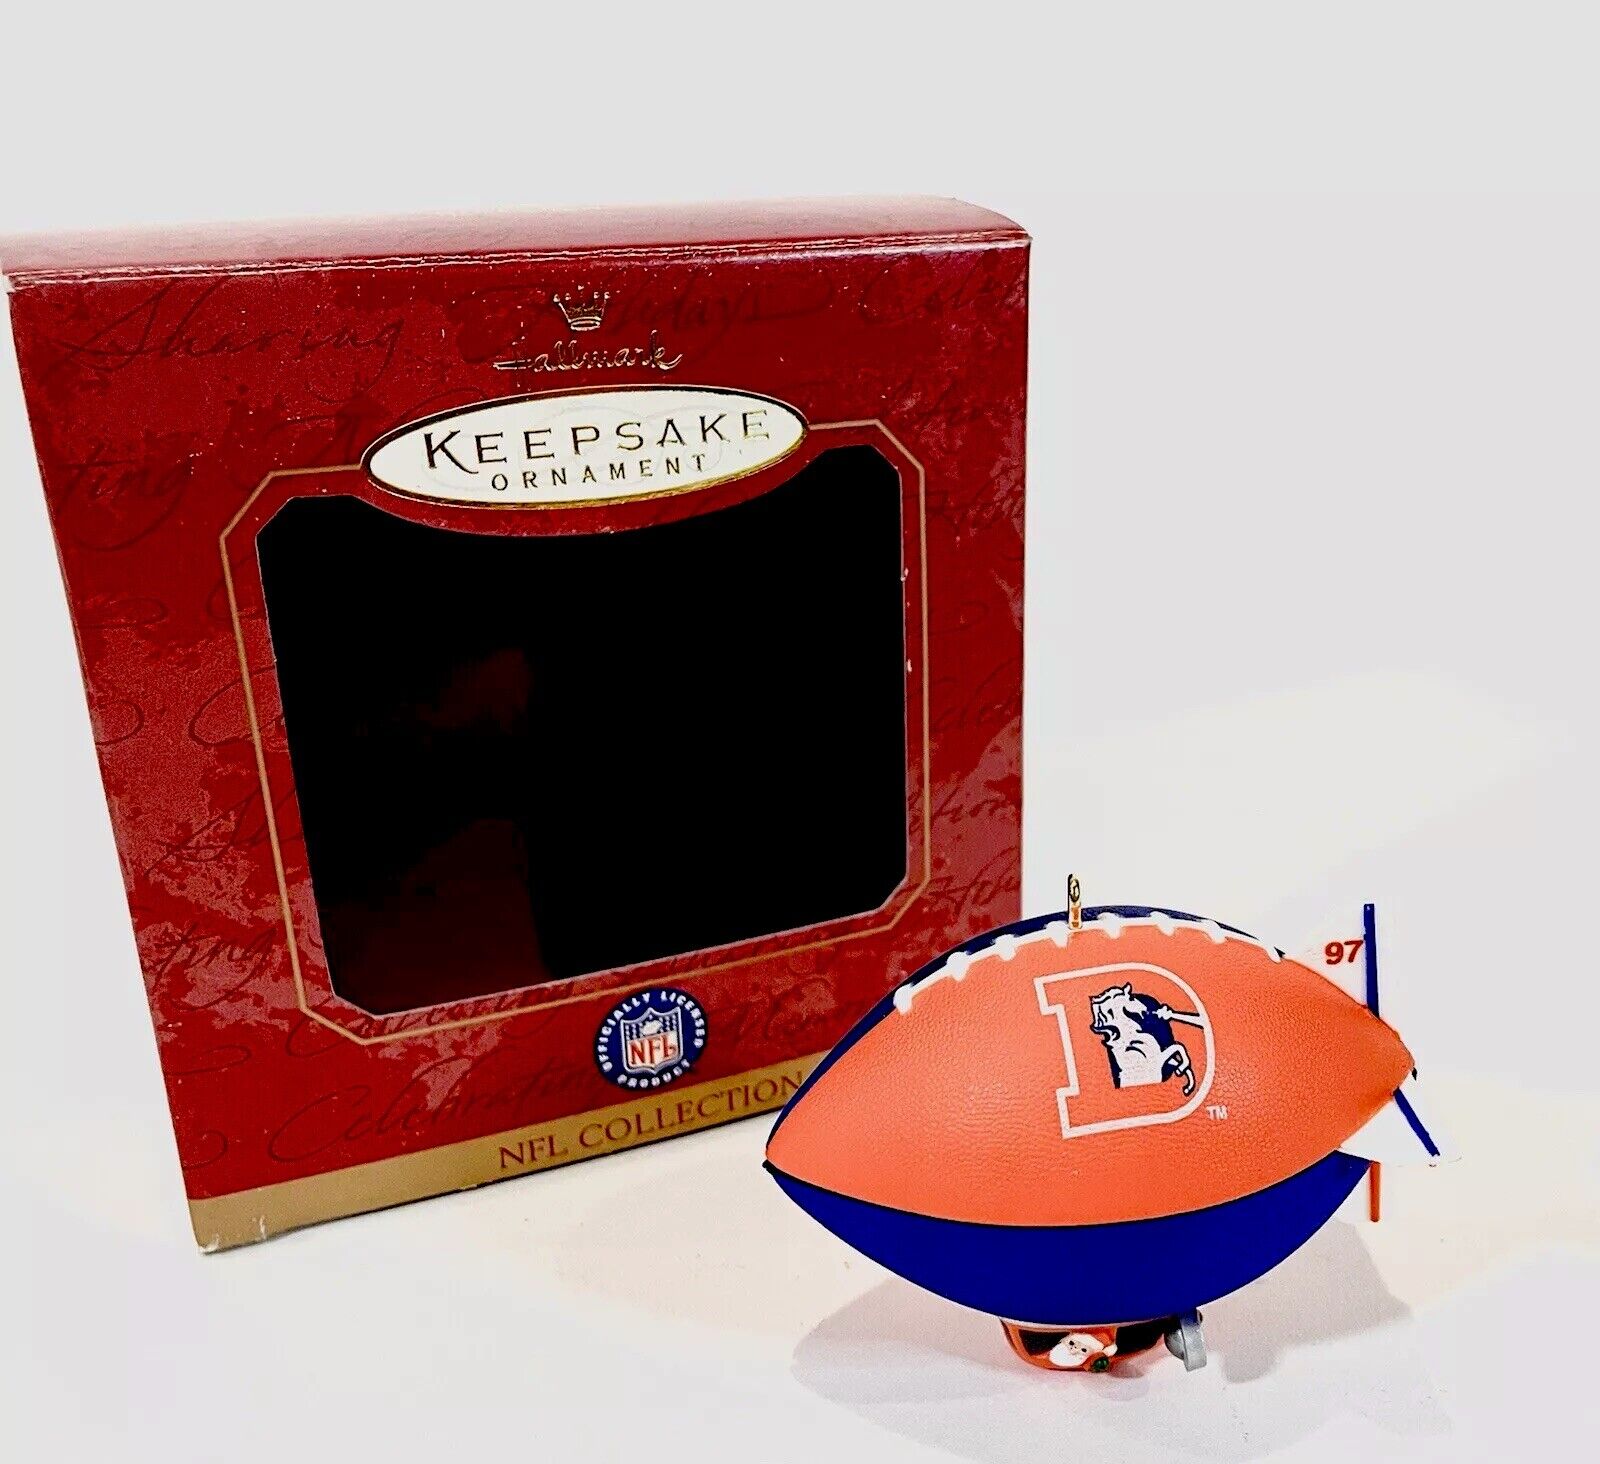 1997 Hallmark Keepsake Ornament Denver Broncos Blimp HTF NFL Collection Football